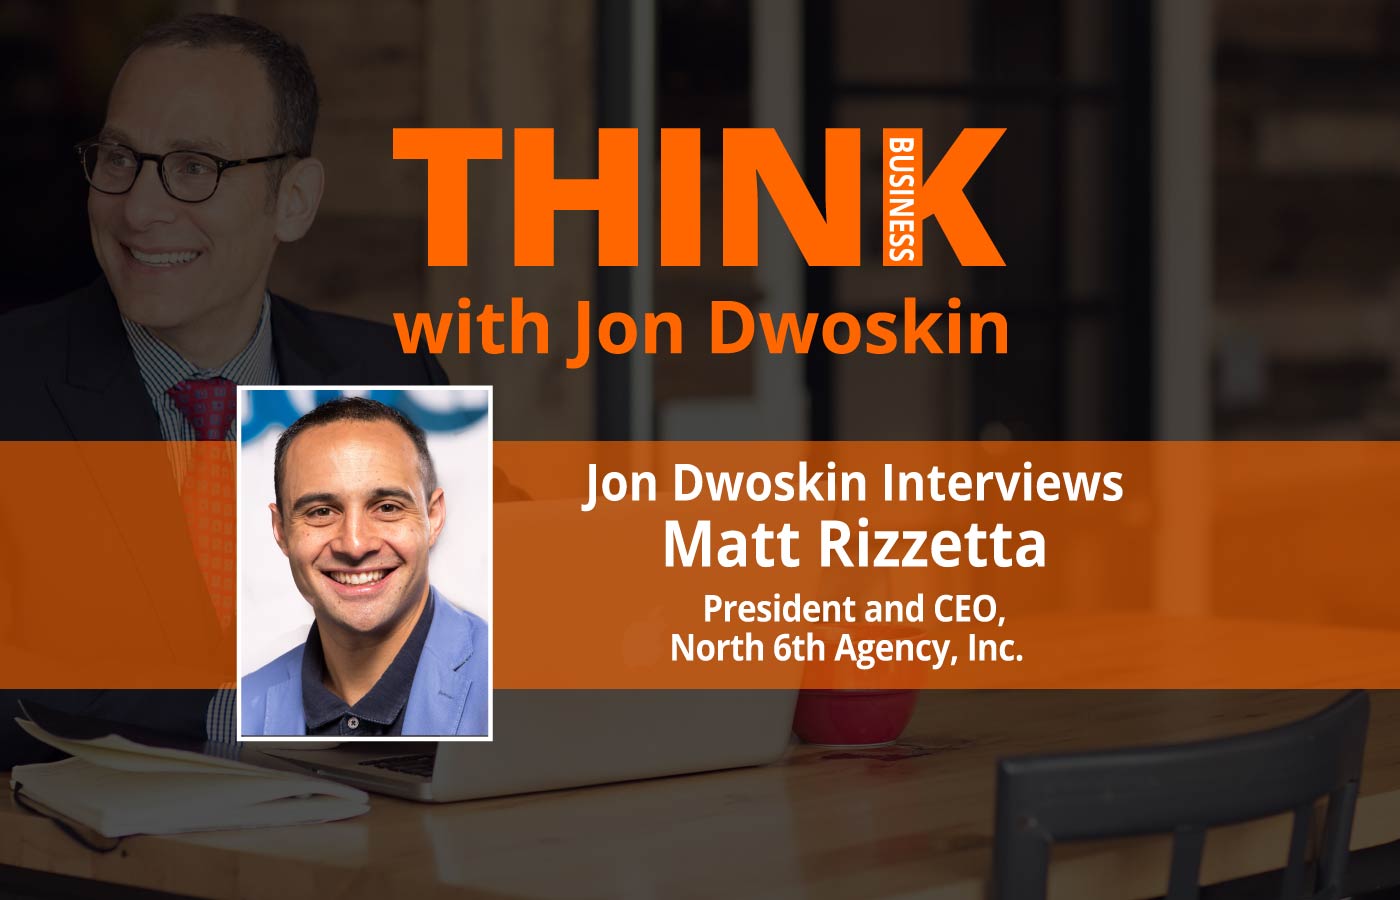 THINK Business: Jon Dwoskin Interviews Matt Rizzetta, President and CEO of North 6th Agency, Inc. 